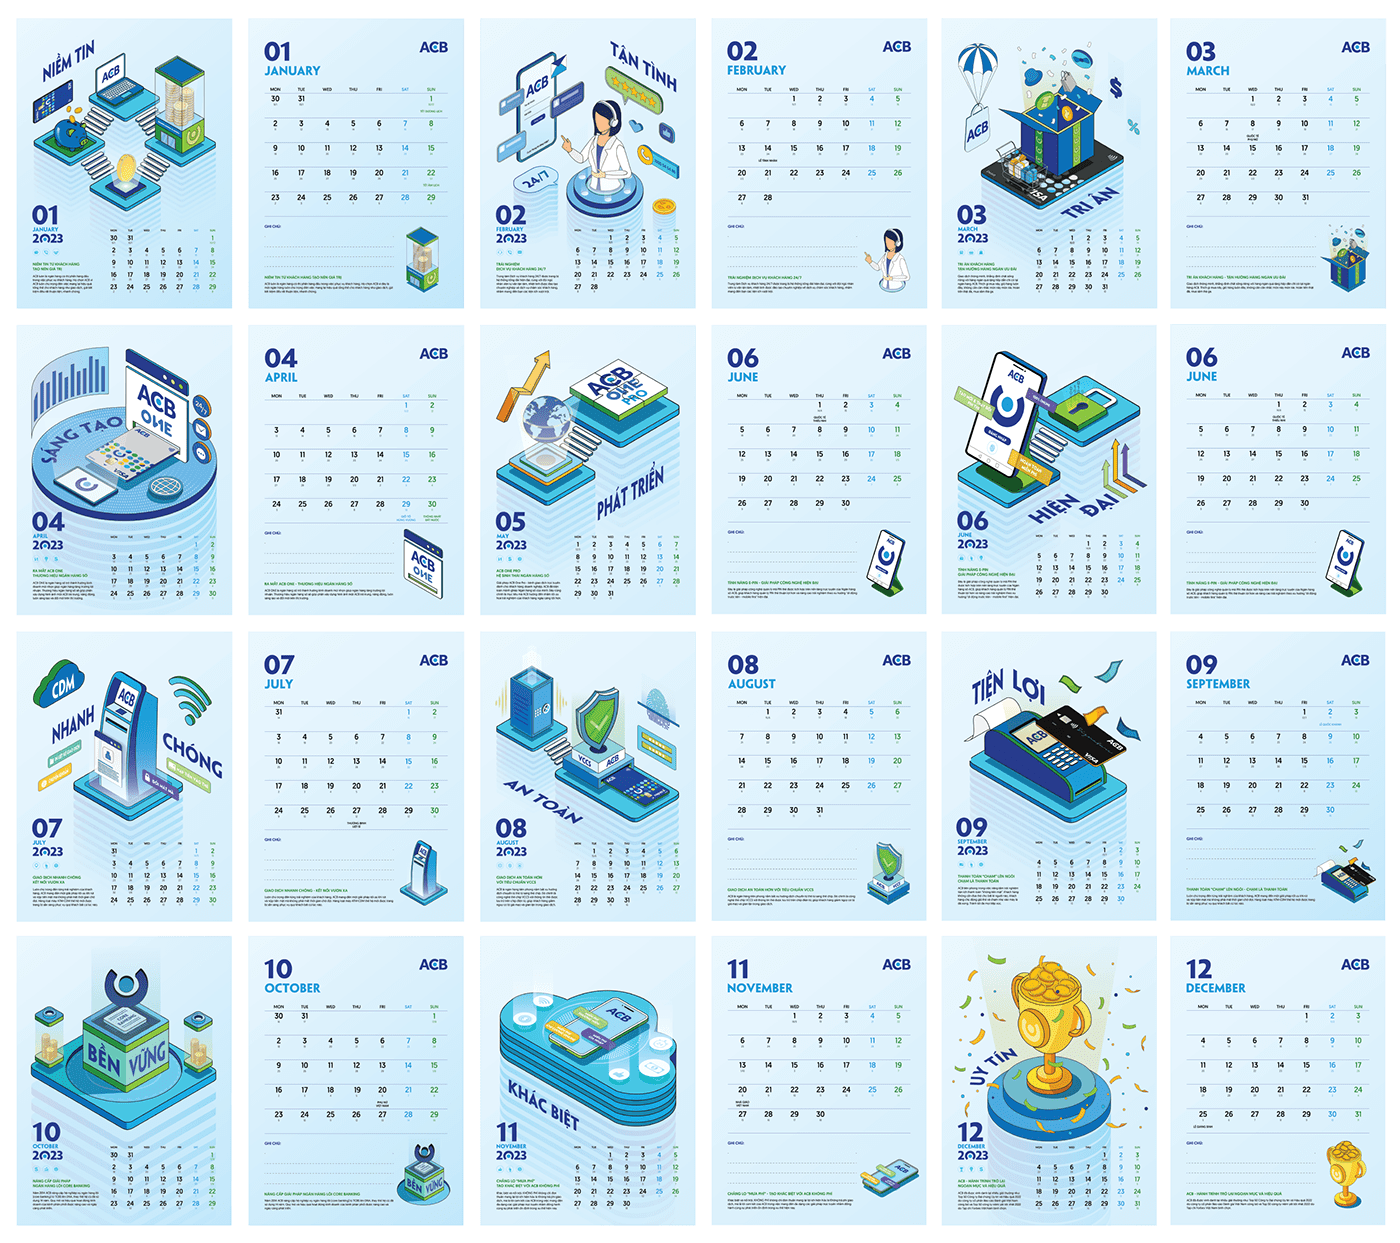 ACB bank Bank calendar calendar 2023 calendar design calendar isometric Isometric